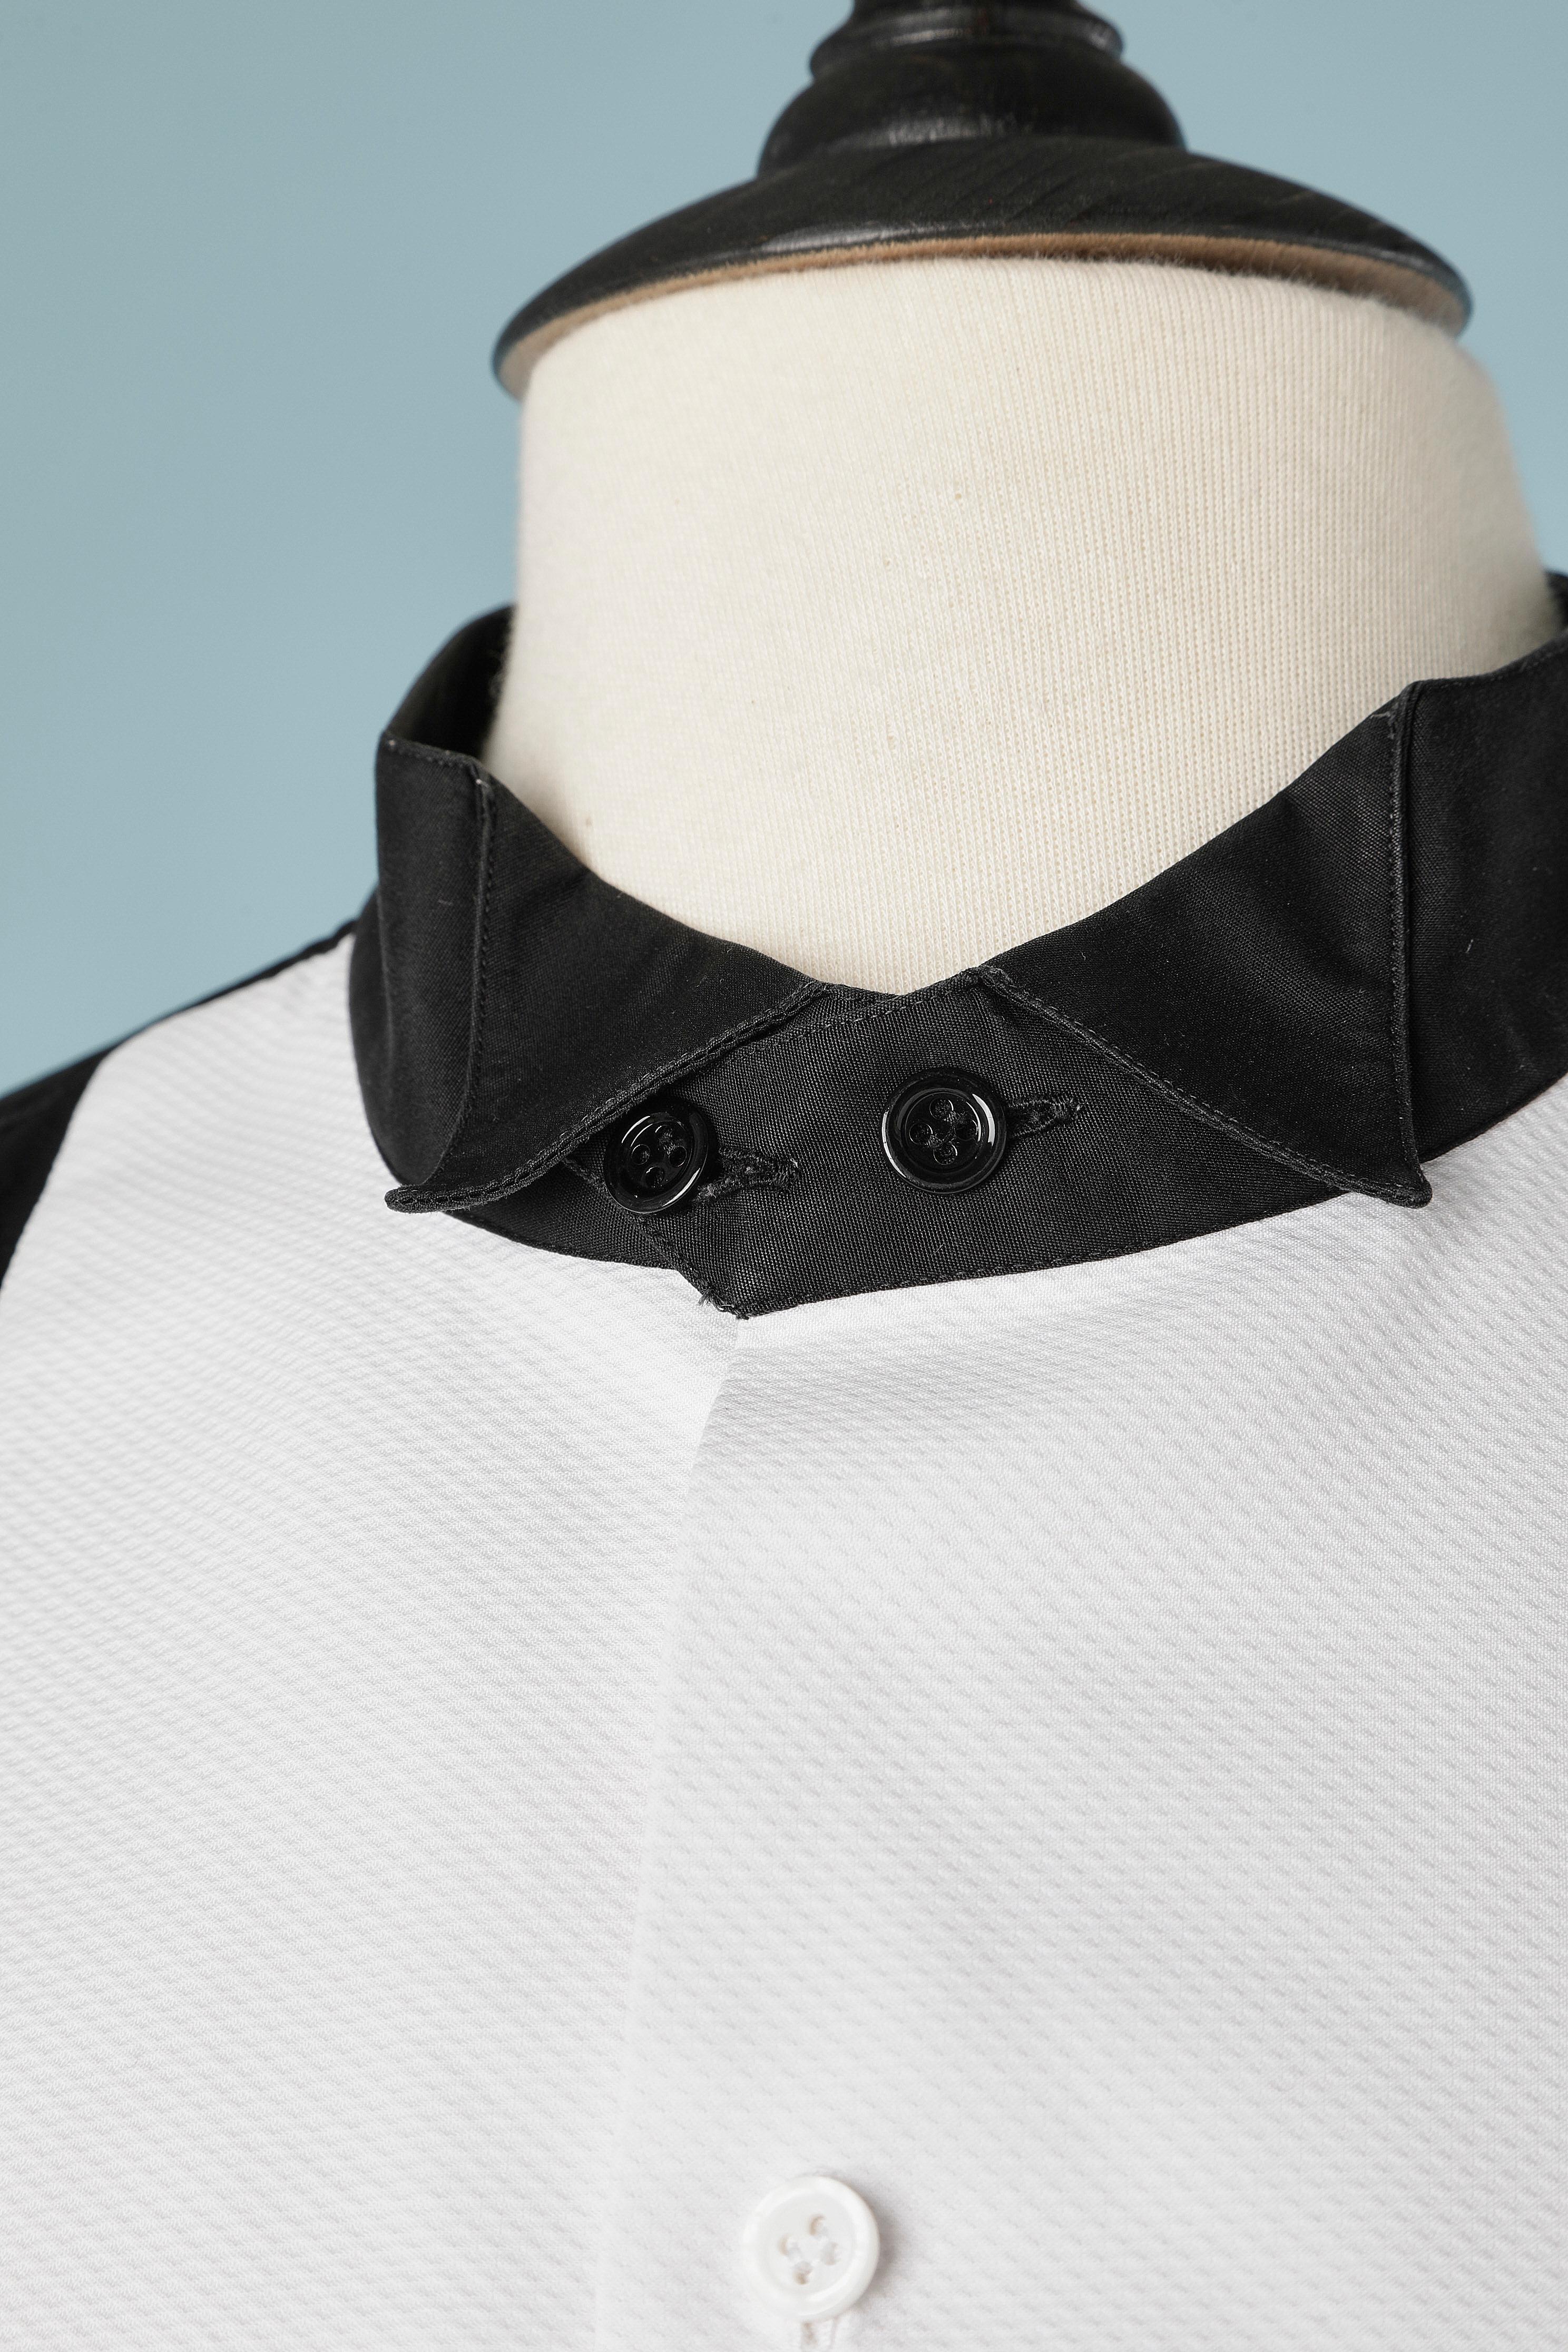 Schwarz-weißes Tuxedo-Hemd.
GRÖSSE 40 / L 